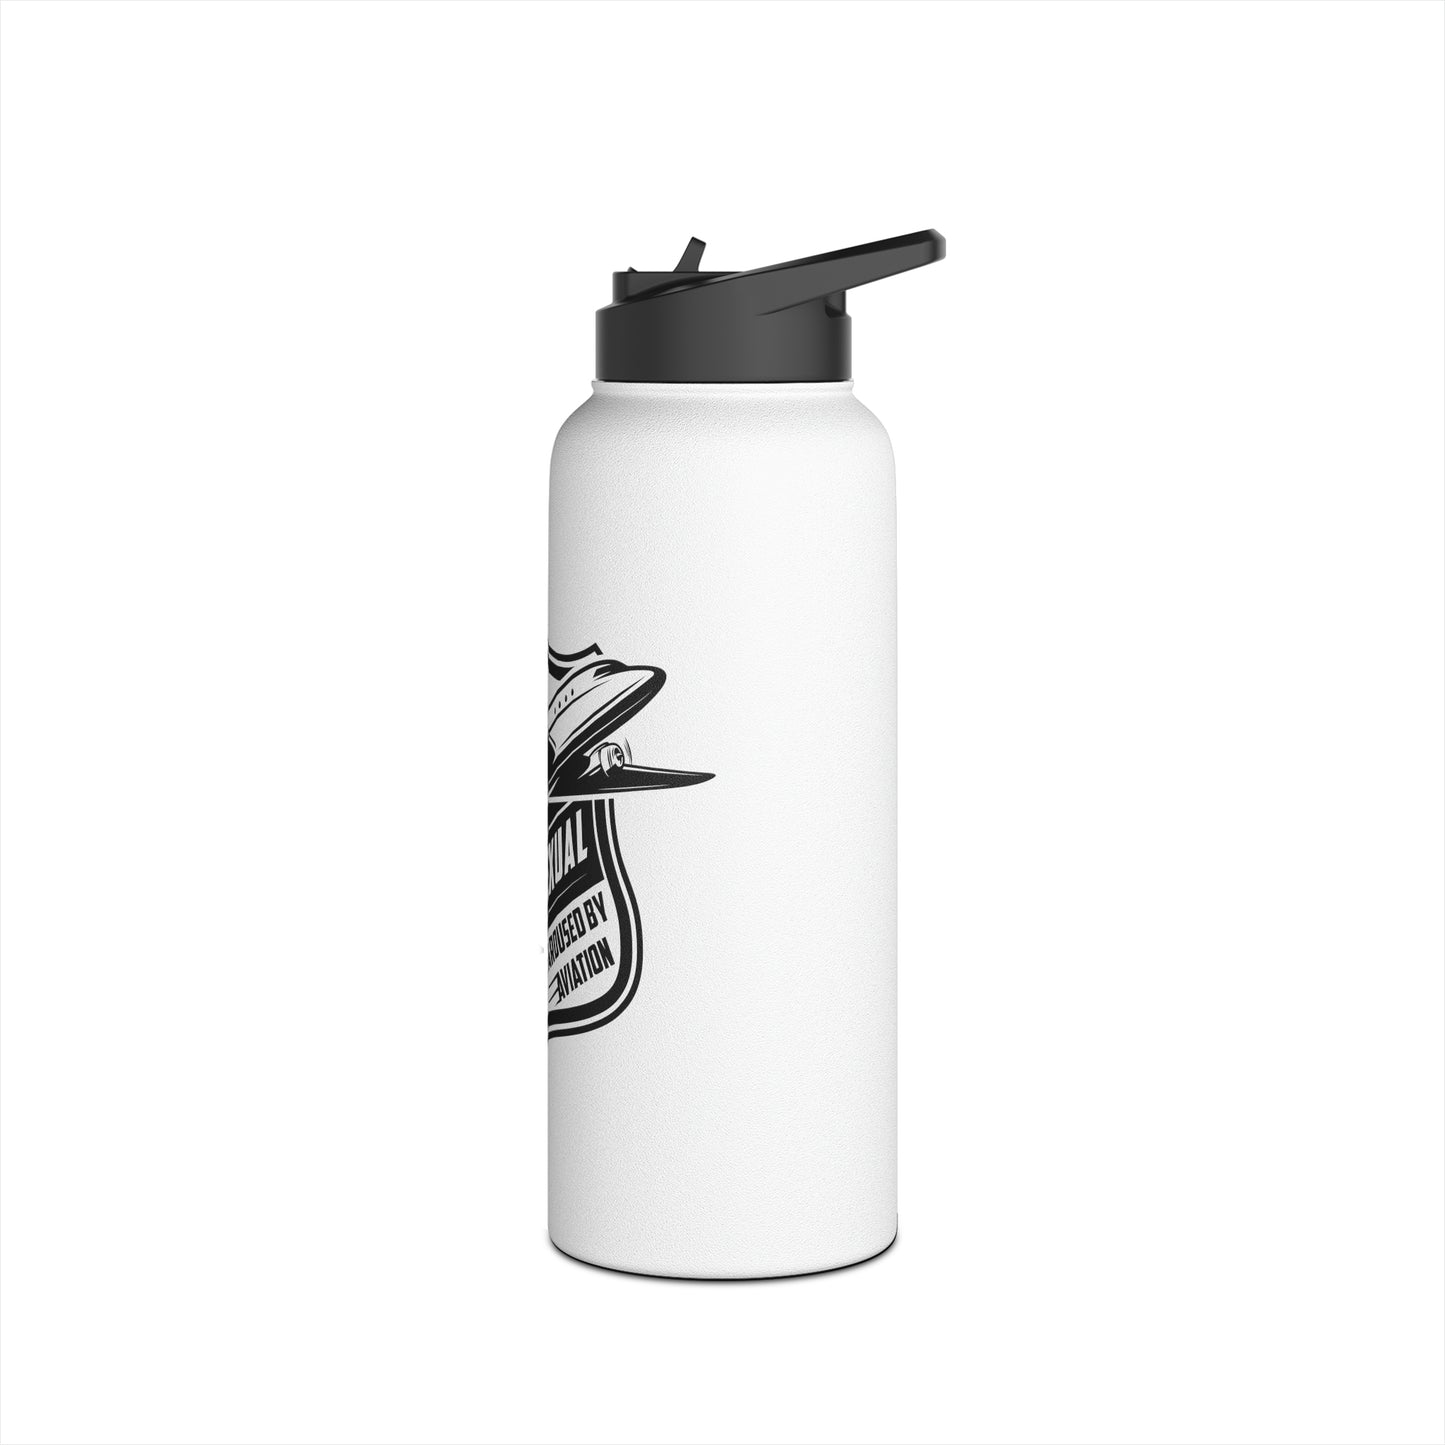 Aerosexual Stainless Steel Water Bottle, Standard Lid